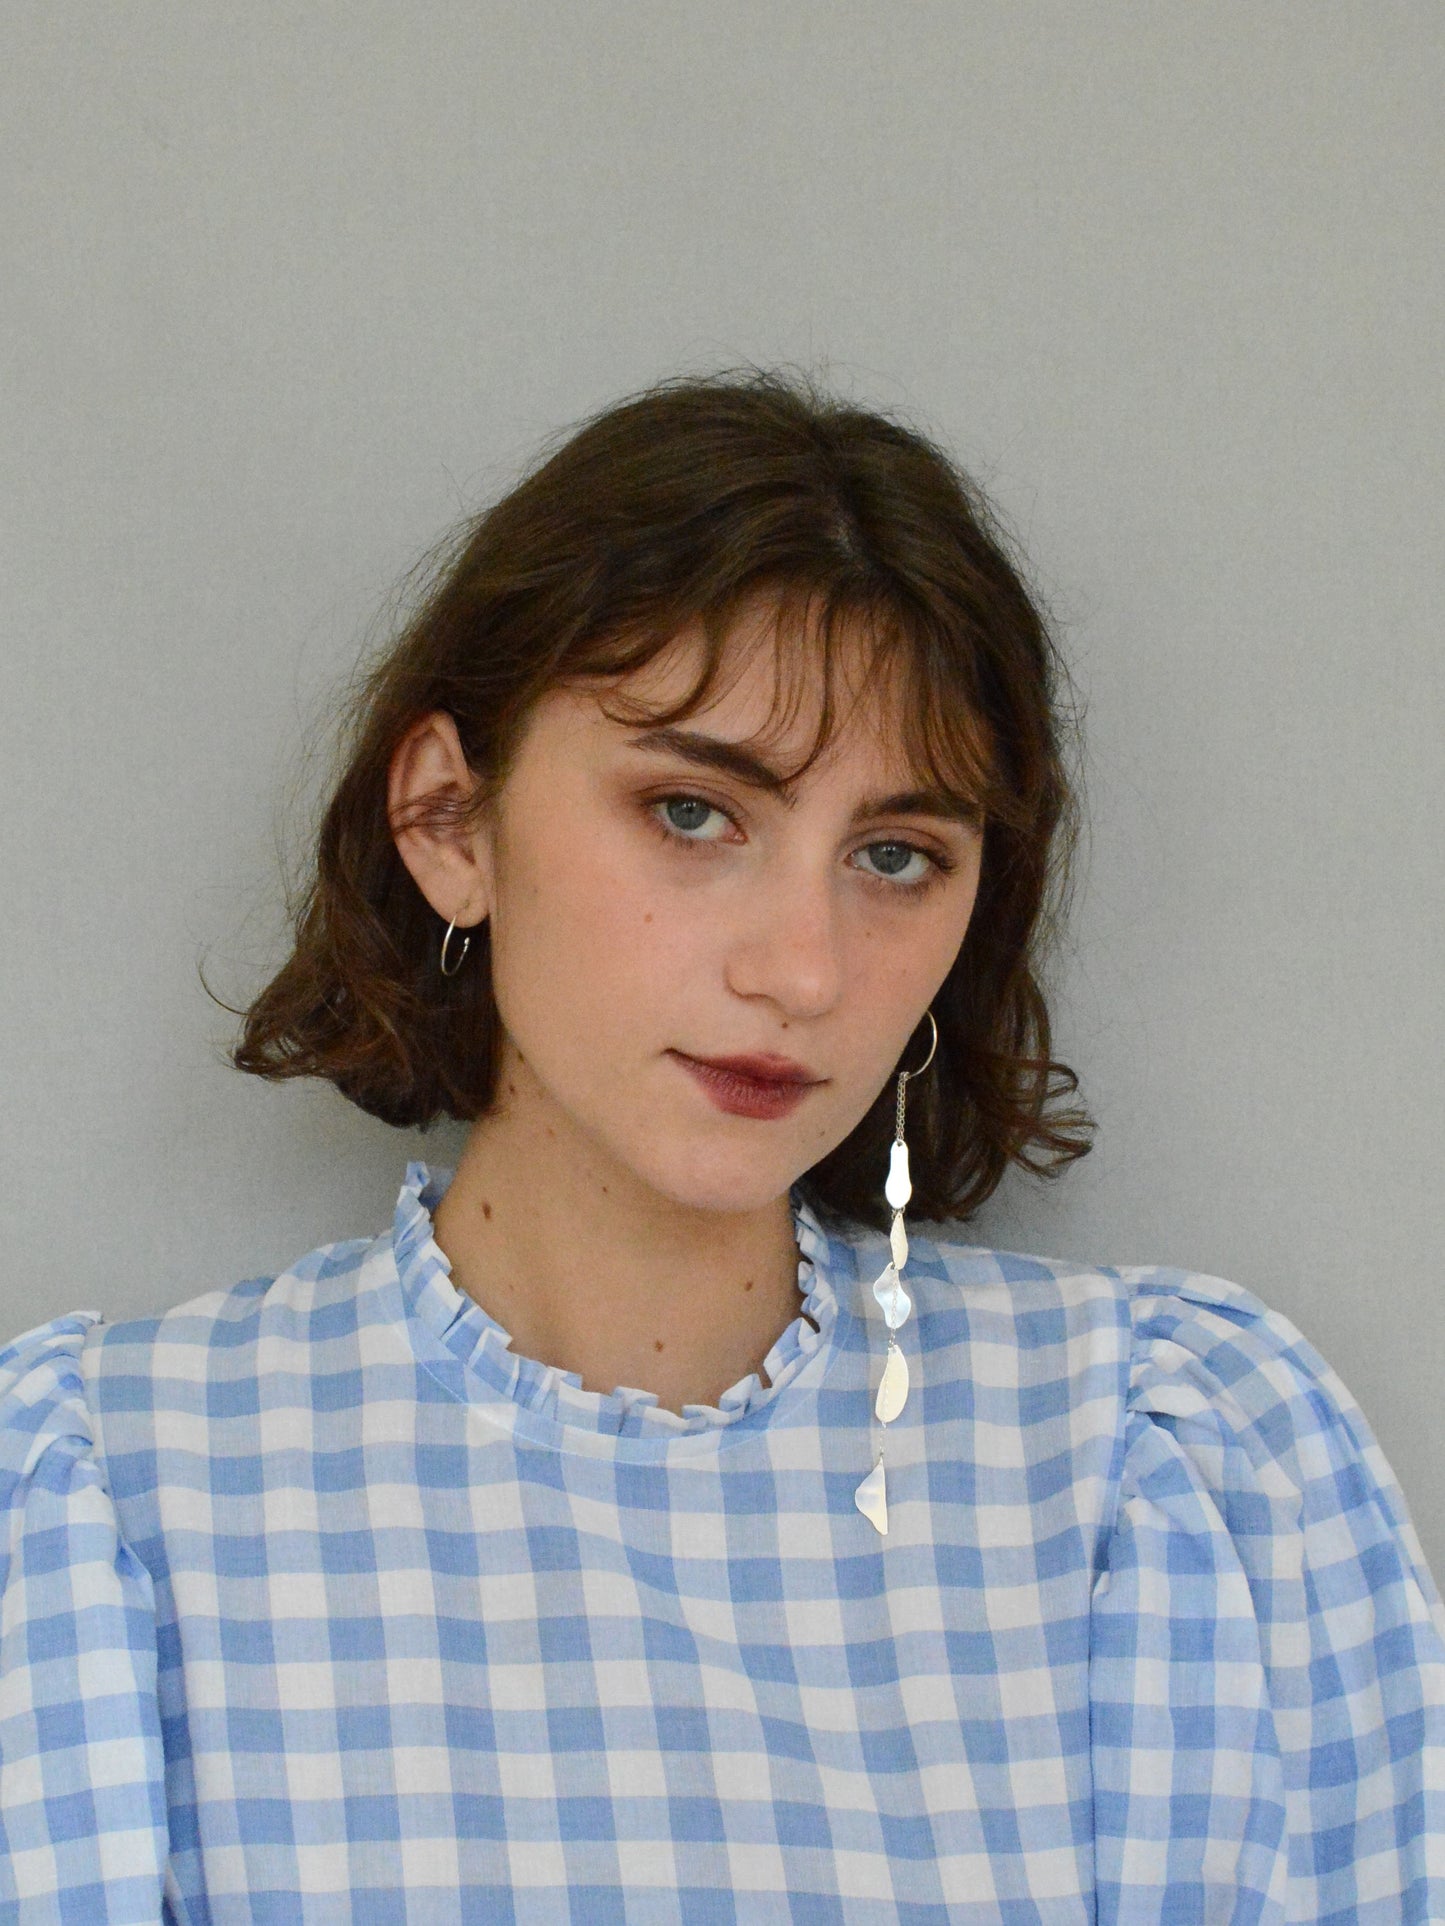 Gisèle earrings